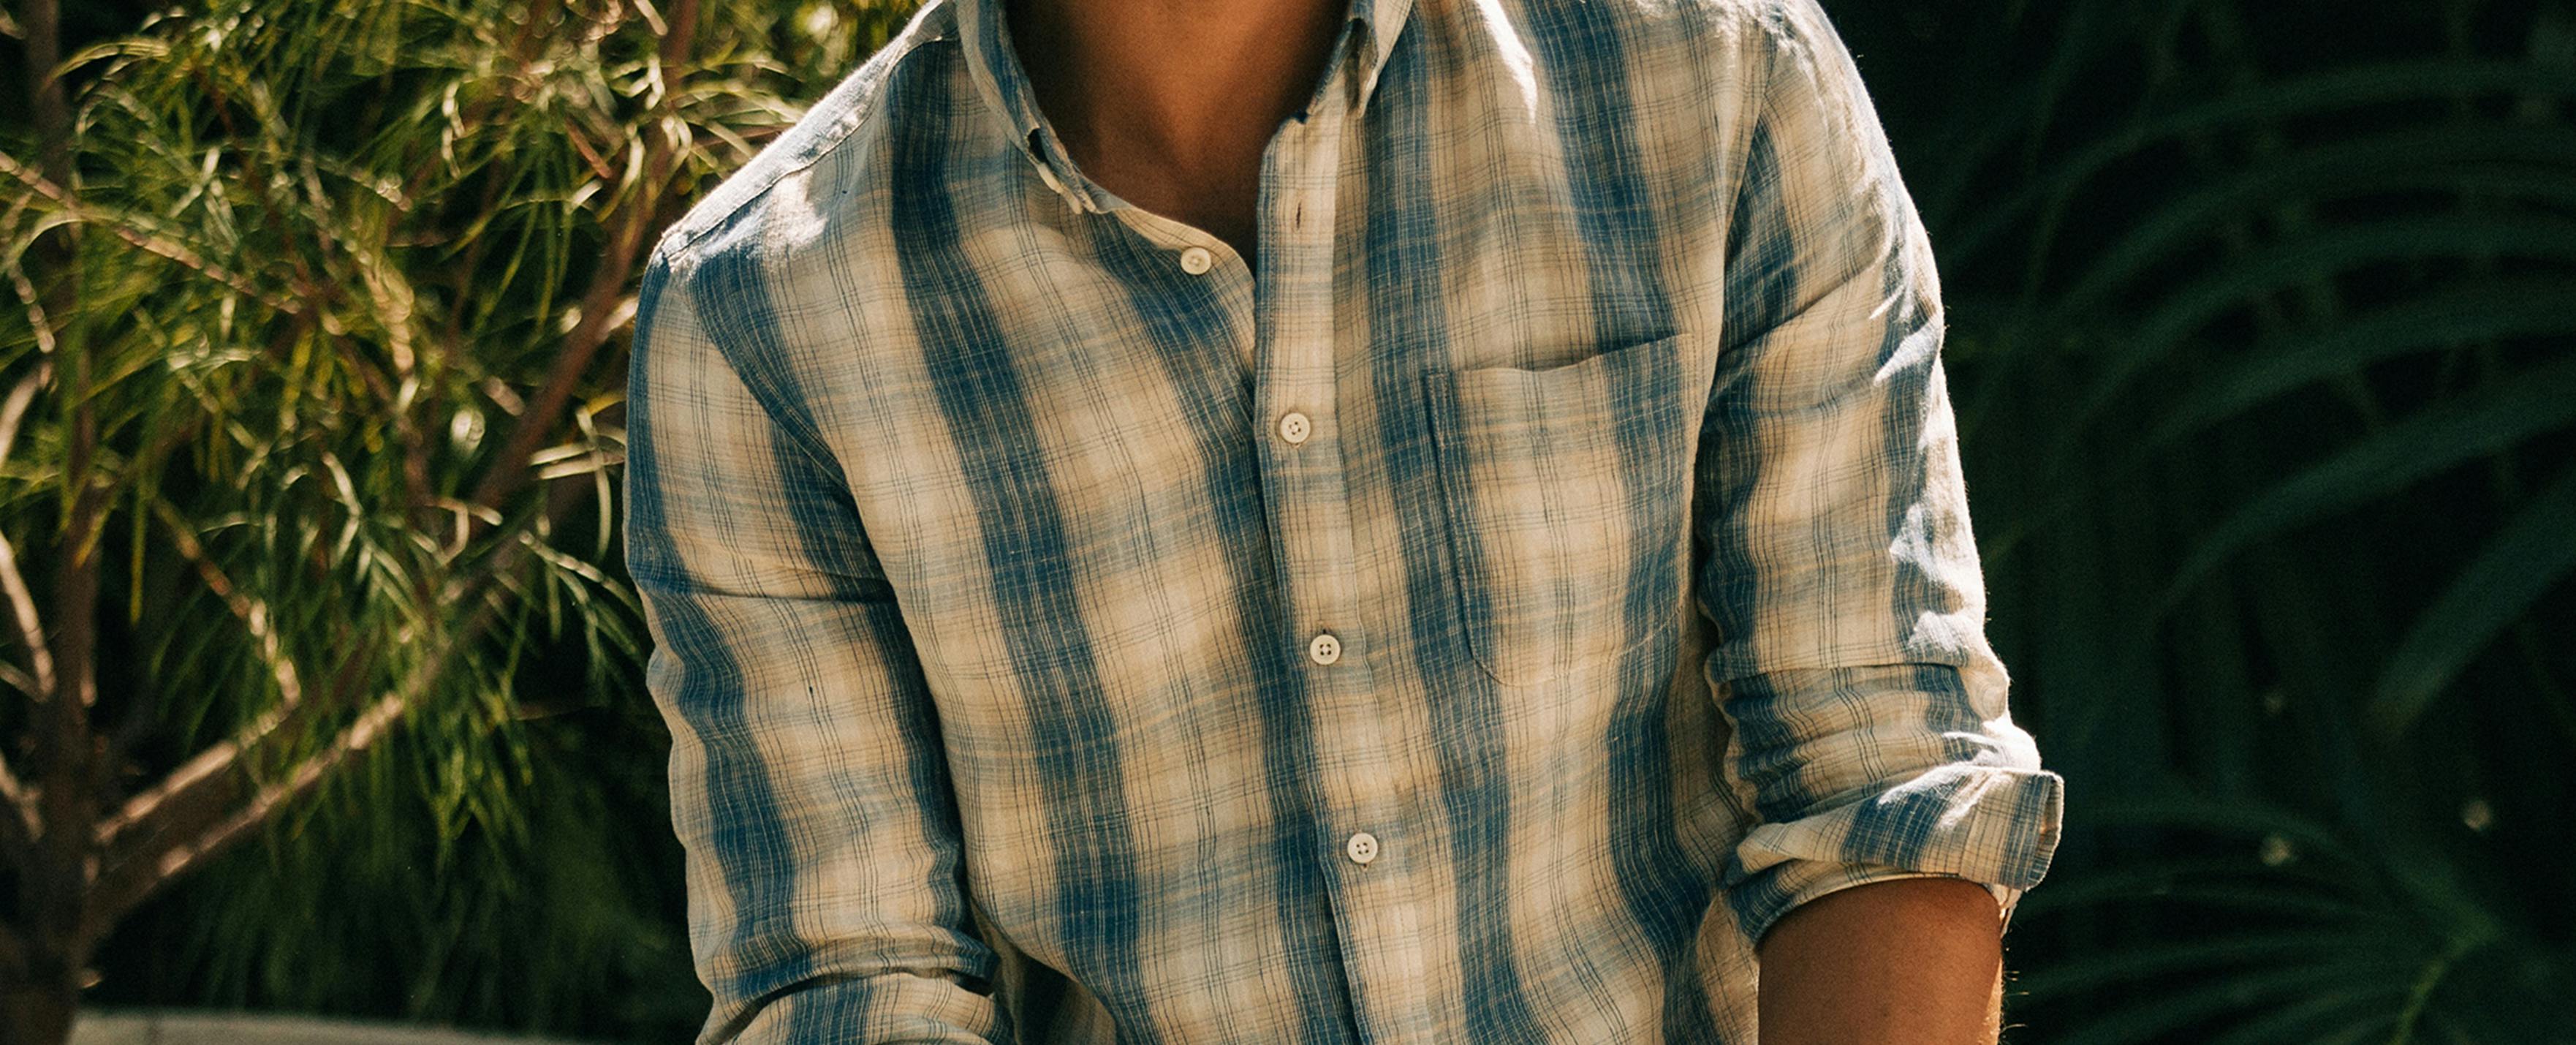 Man wearing plaid button up shirt